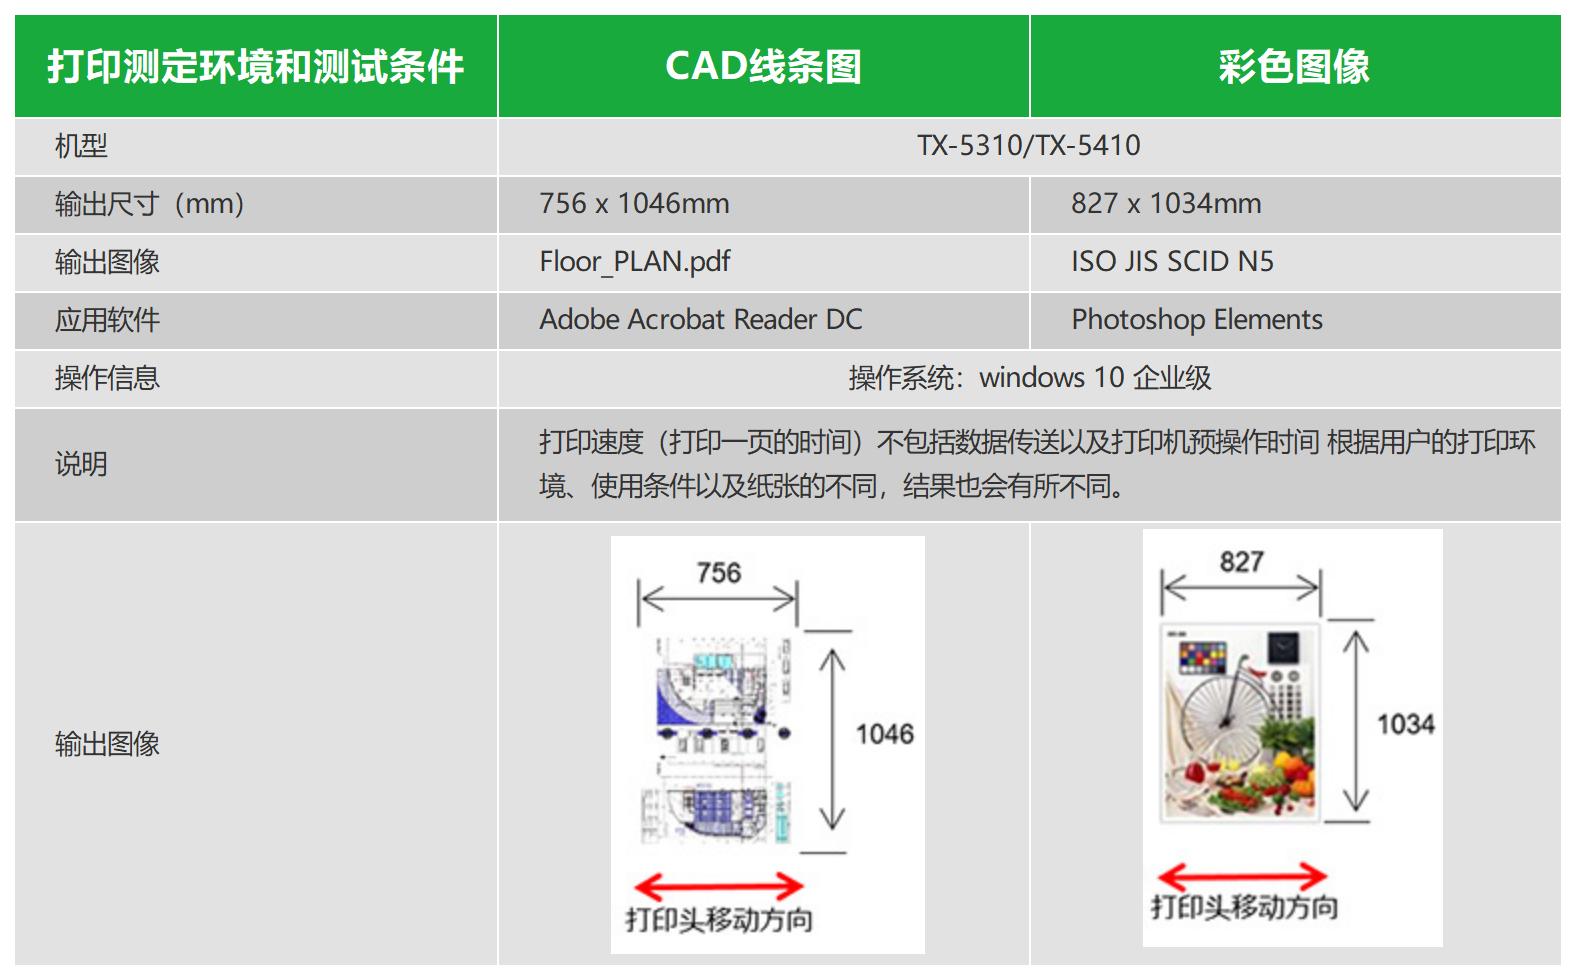 TX-5310D 产品说明书_打印测试3.jpg